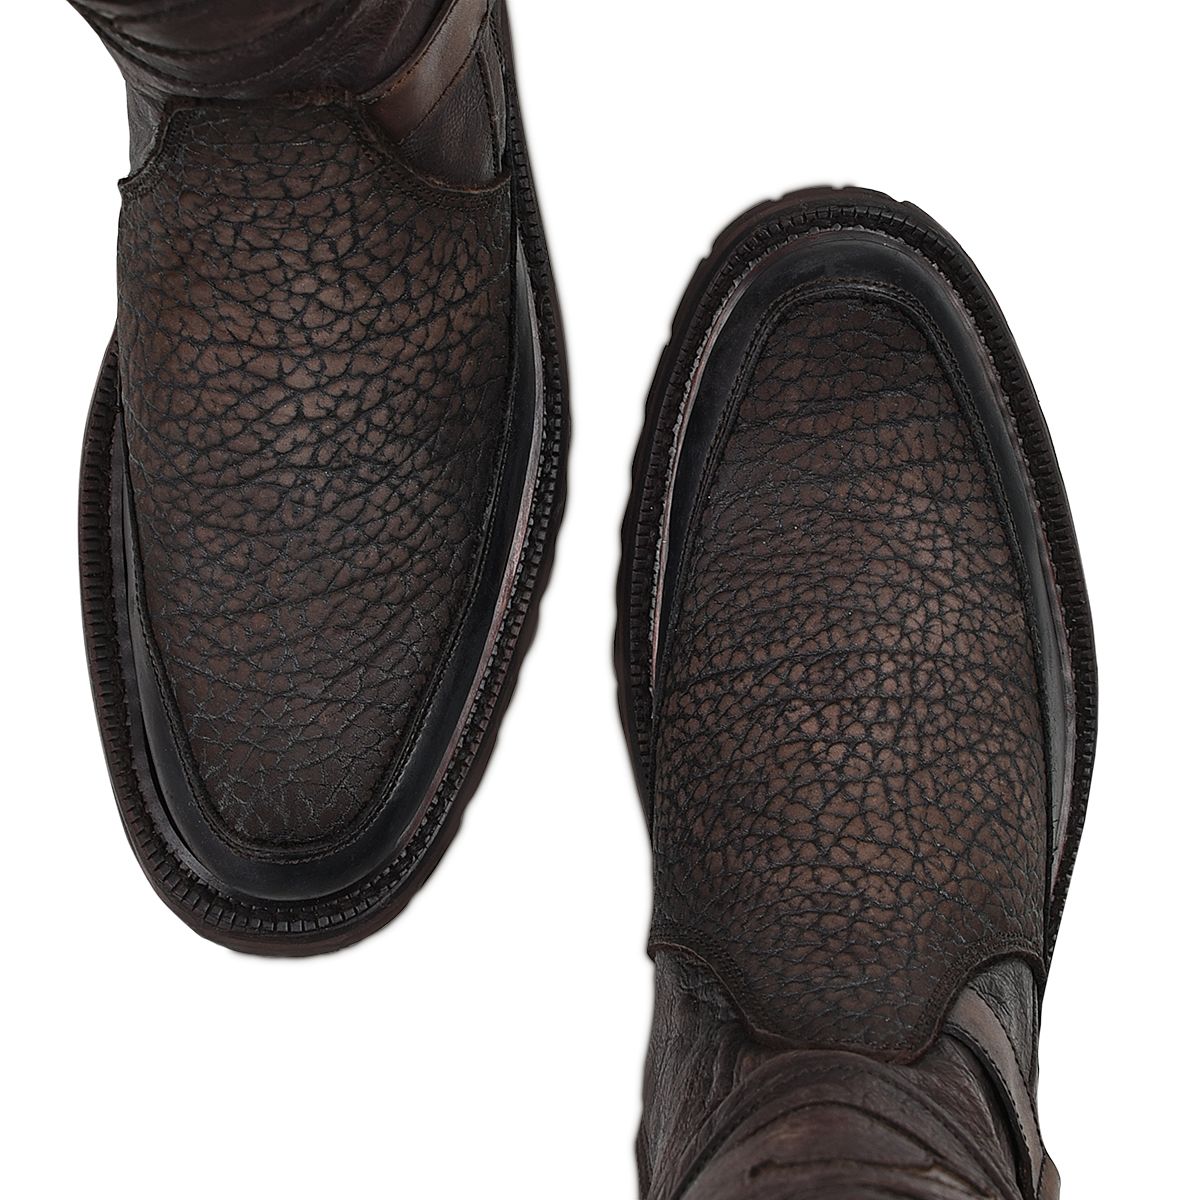 2T2KCT - Cuadra brown vintage fashion cowboy bull neck mid boots for men-CUADRA-Kuet-Cuadra-Boots